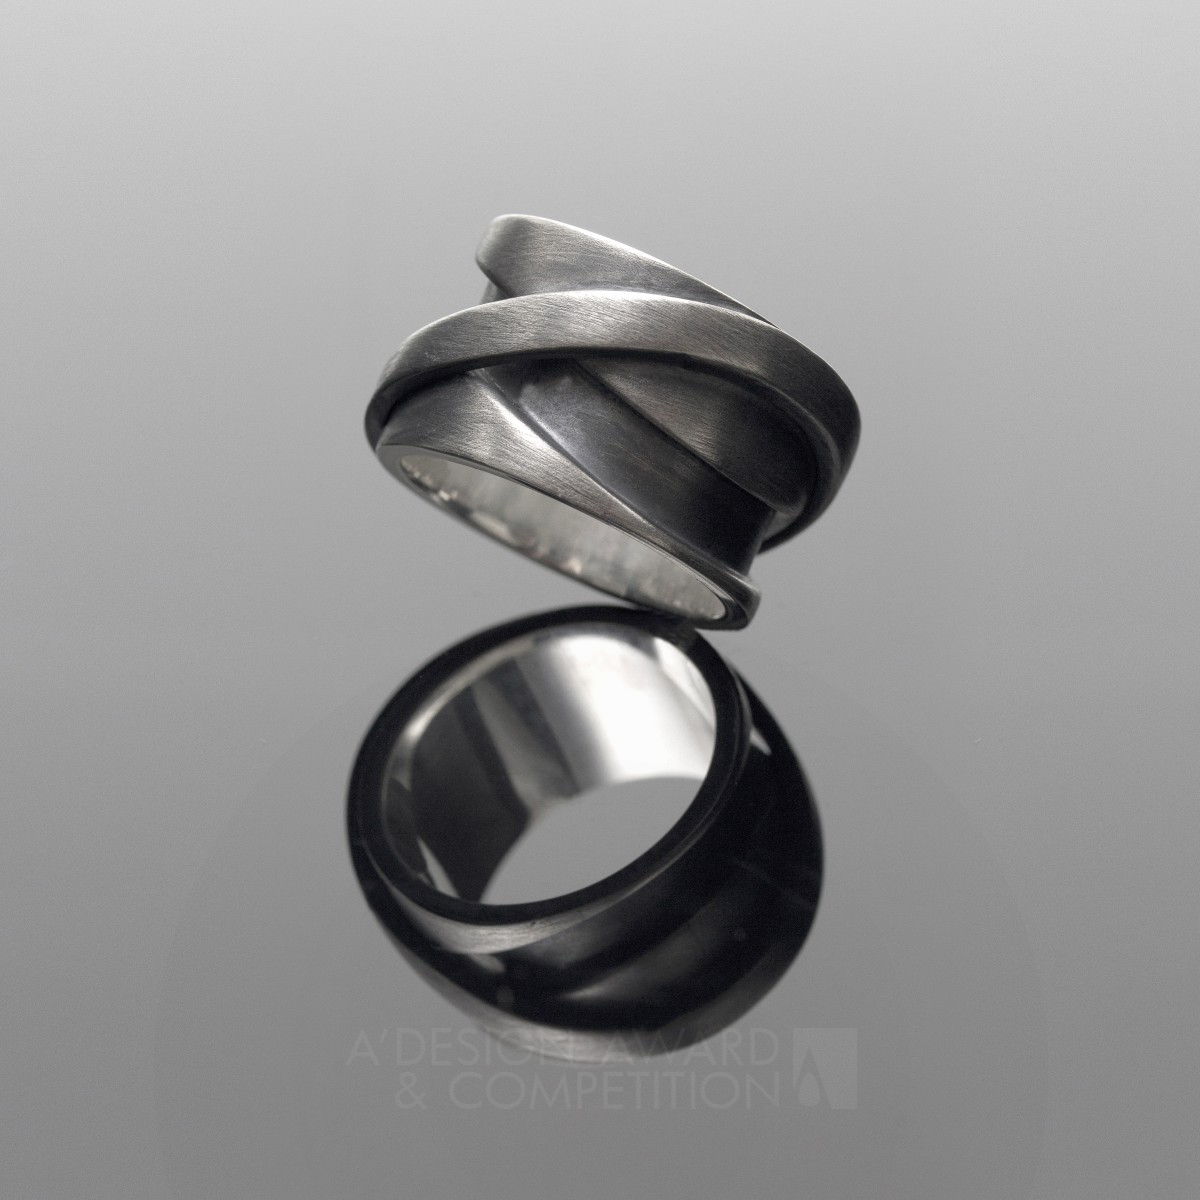 Infinito Ring by Brazil & Murgel